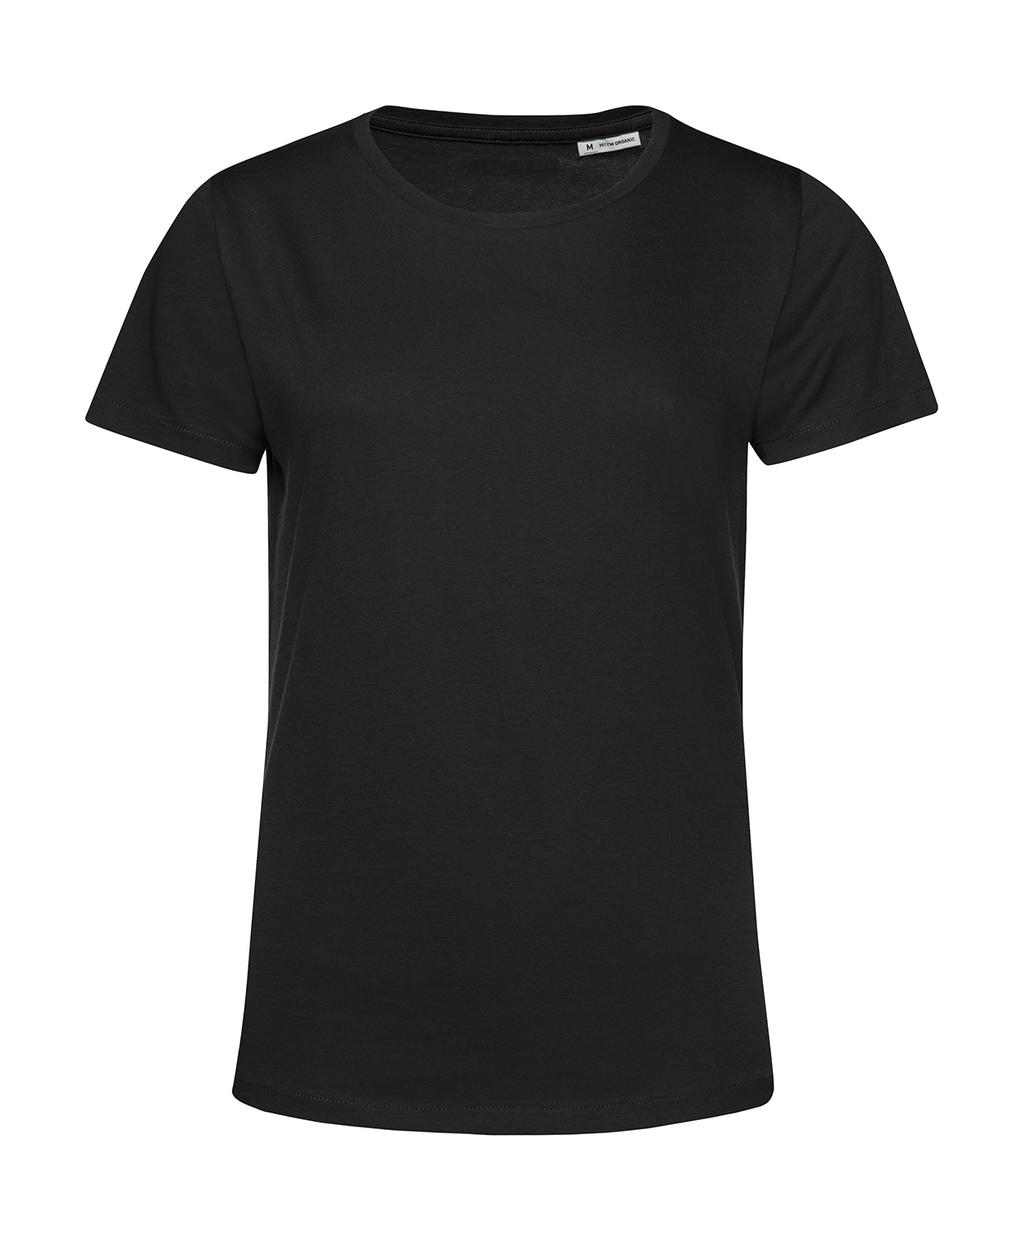 Tričko dámské BC Organic Inspire E150 - černé, M